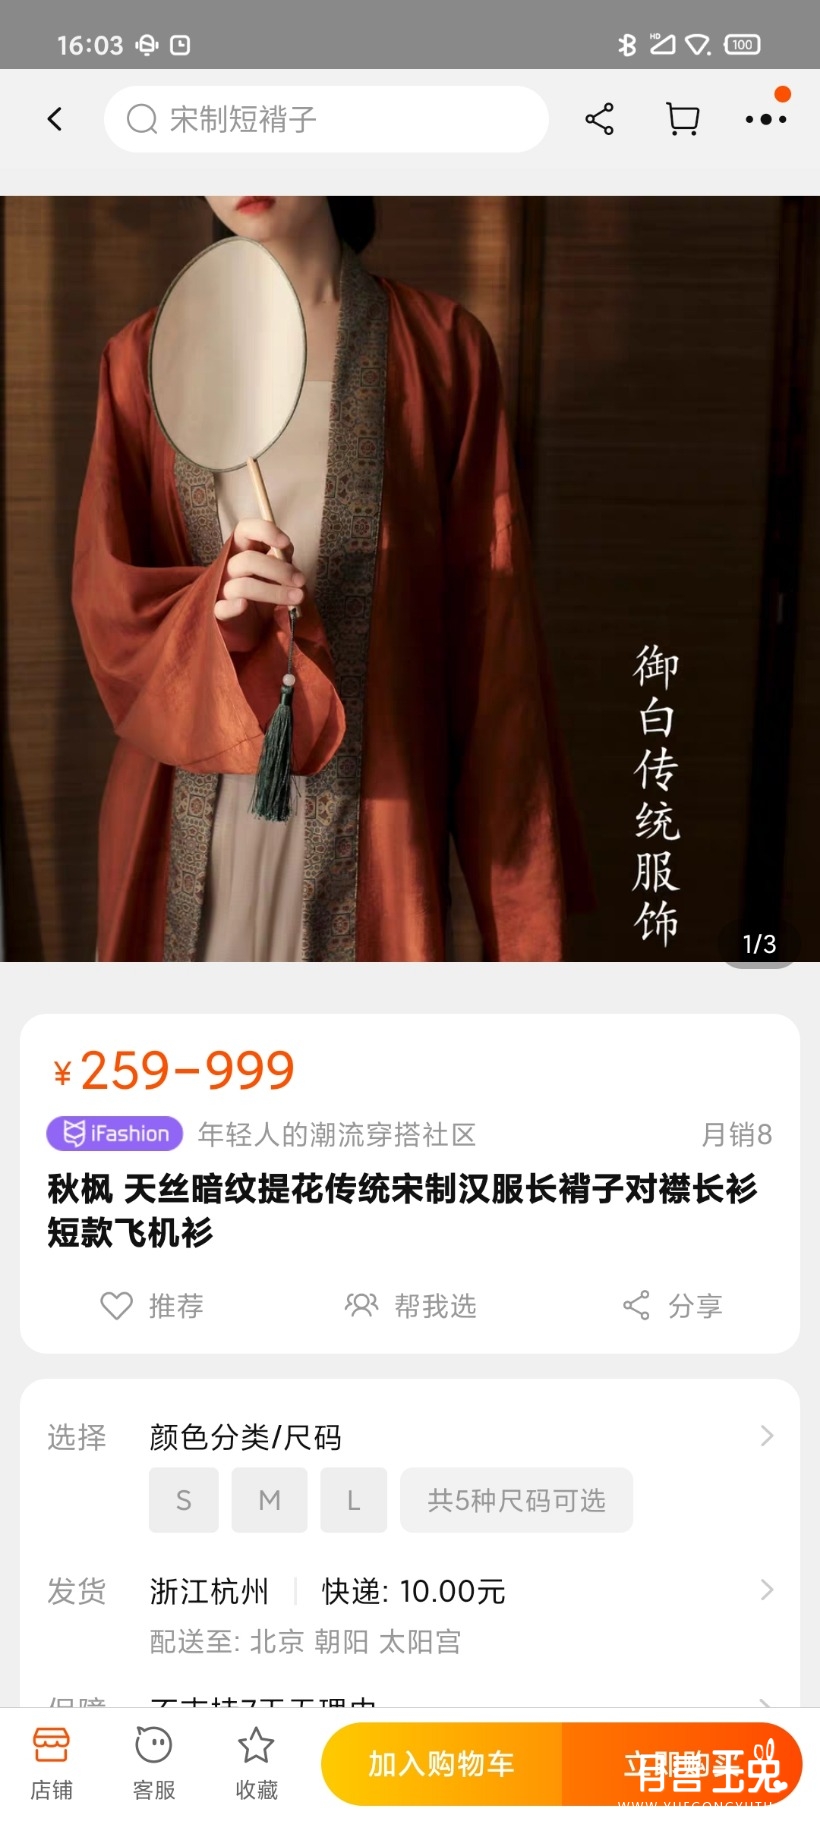 Screenshot_2021-03-31-16-03-16-176_com.taobao.taobao.jpg